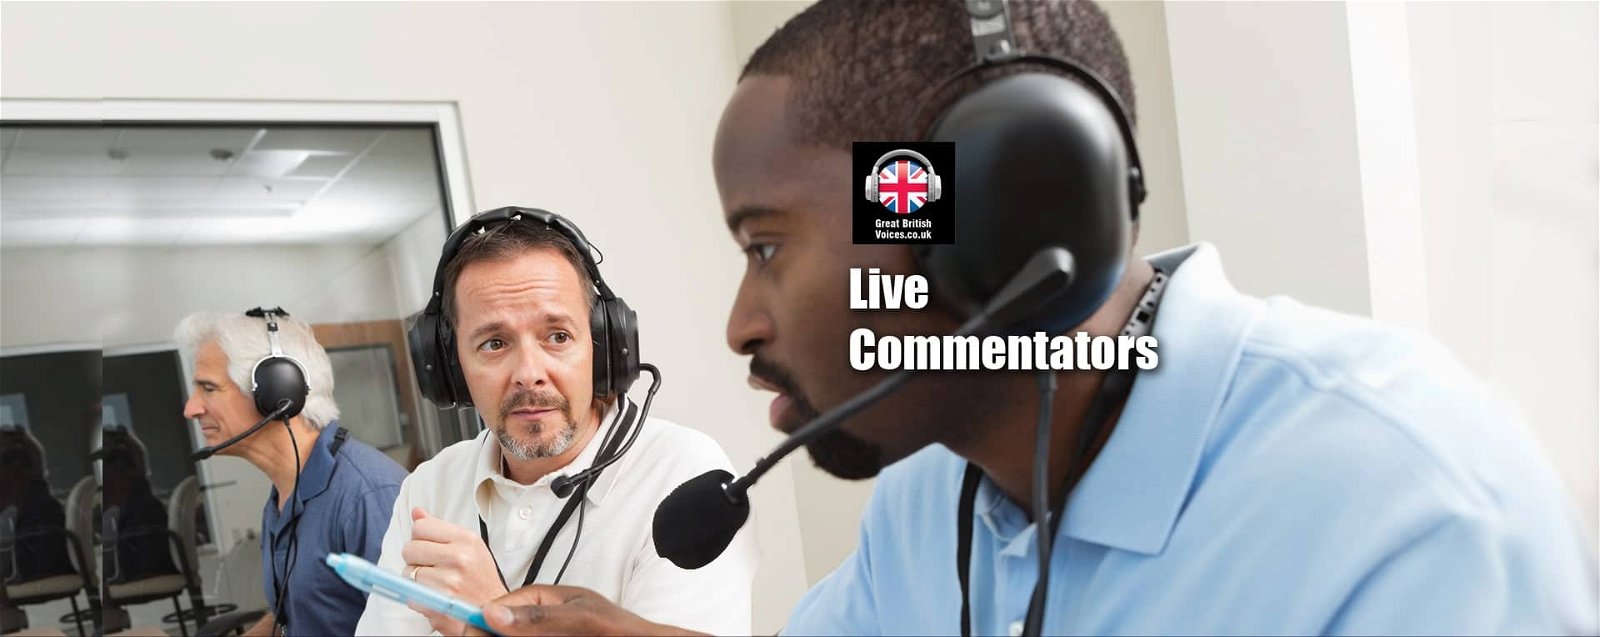 Live Commentators at Great British Voices-min